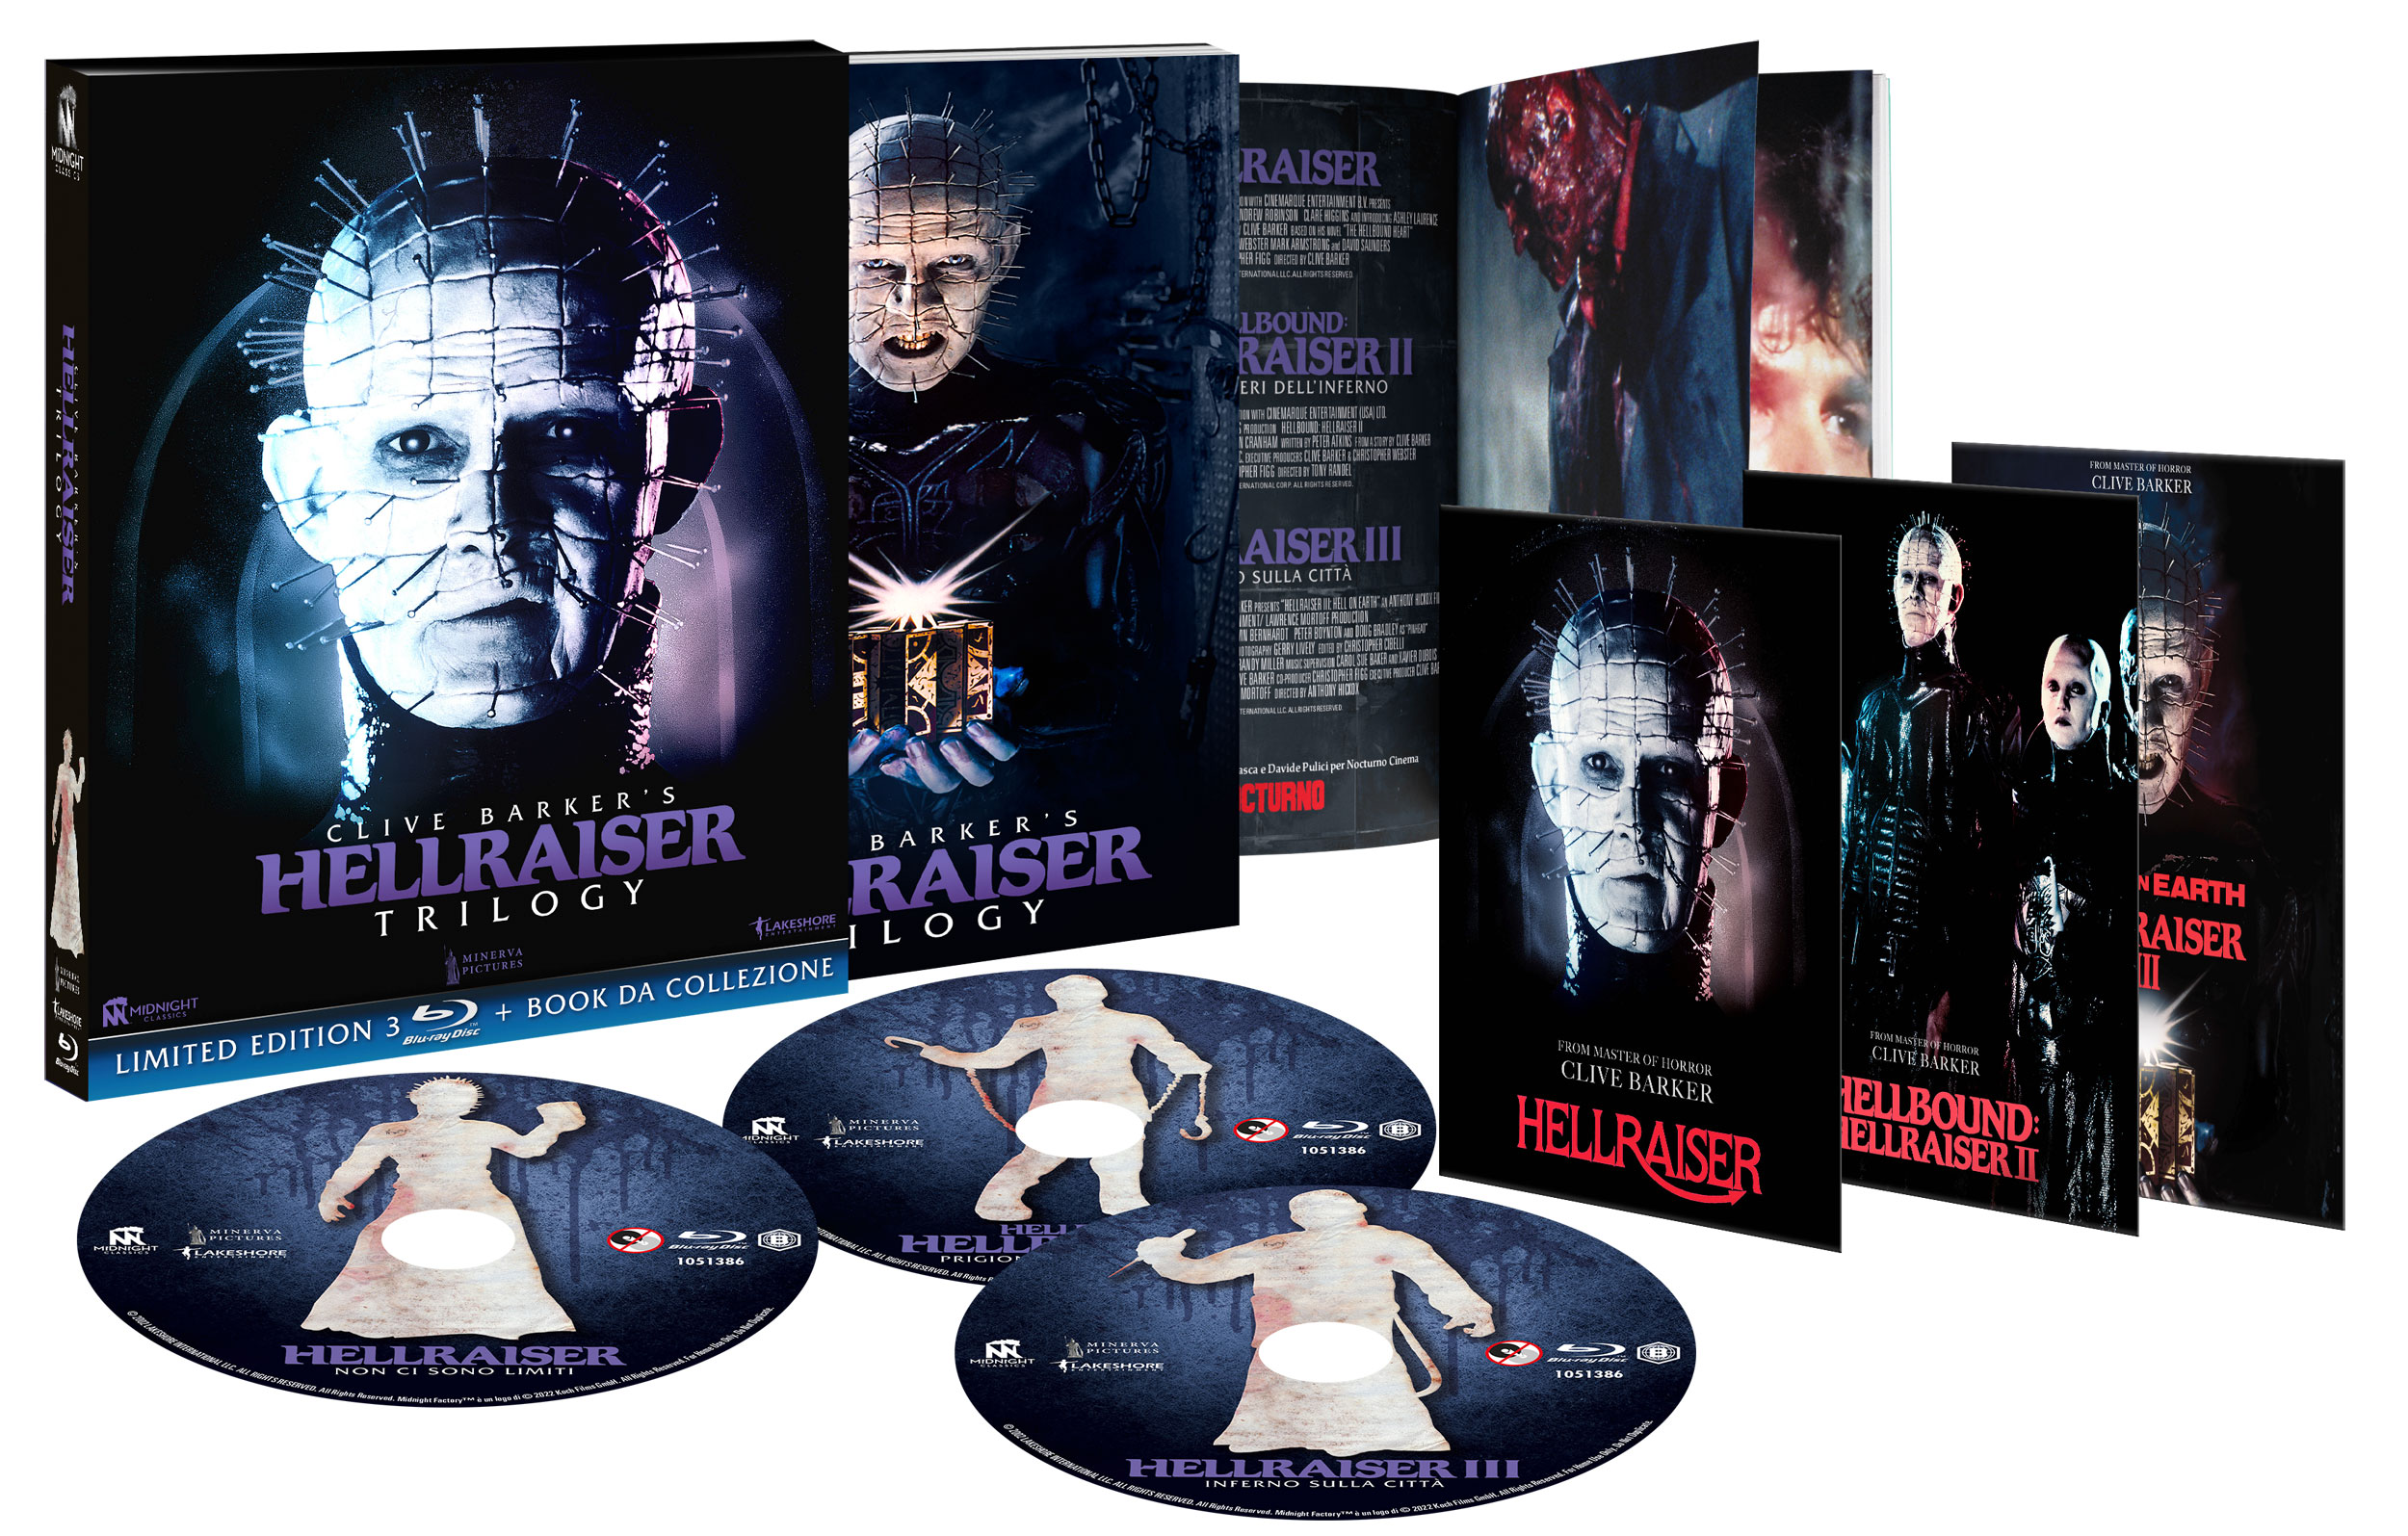 Hellraiser Trilogy in Blu-ray